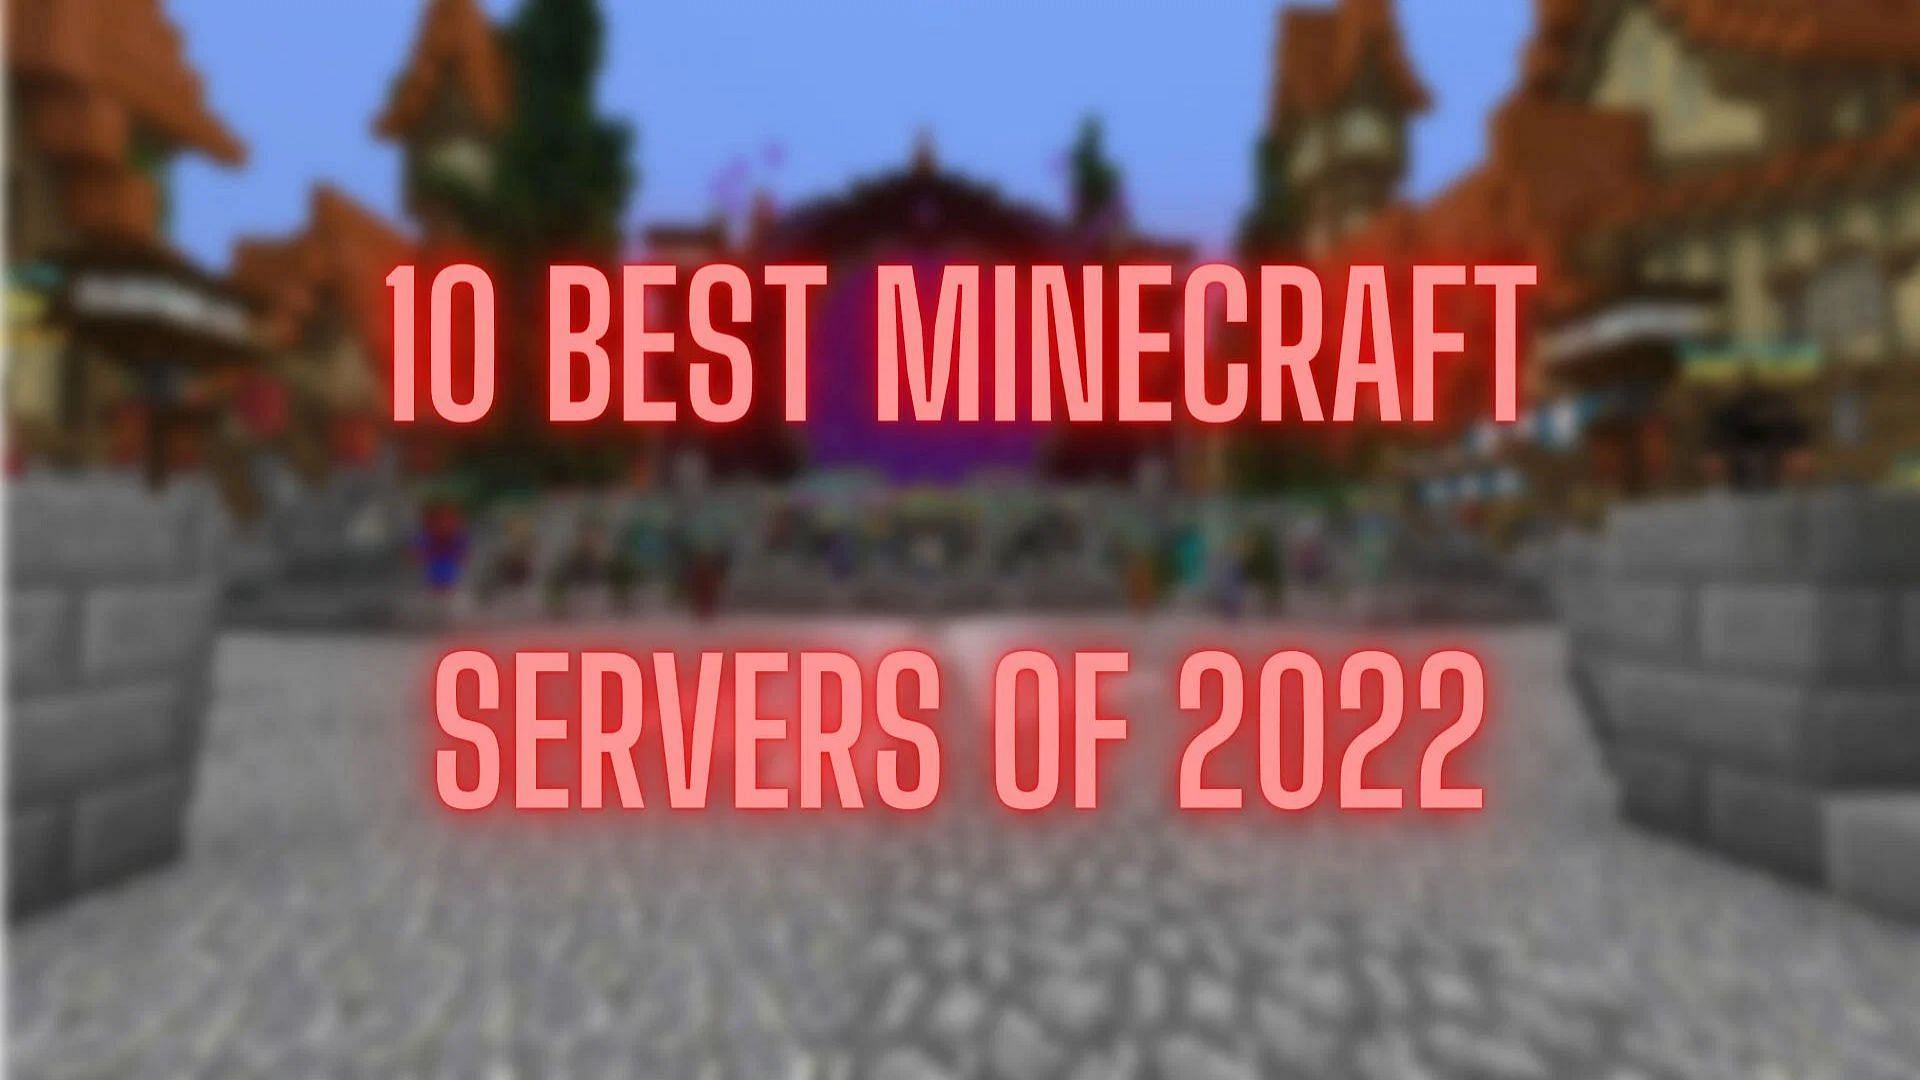 Minecraft servers are the best way to enjoy MC multiplayer (Image via Sportskeeda)